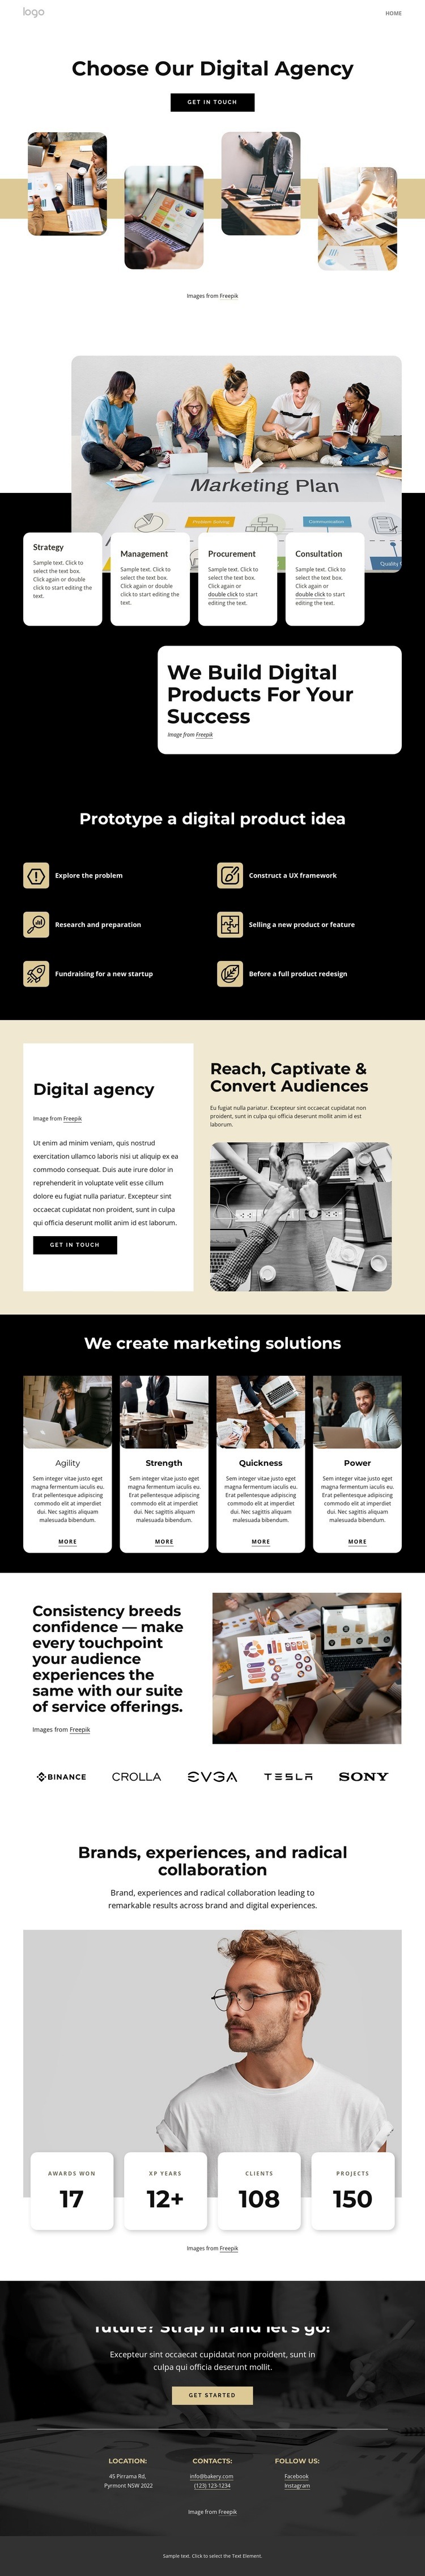 Choose our digital agency Web Page Design